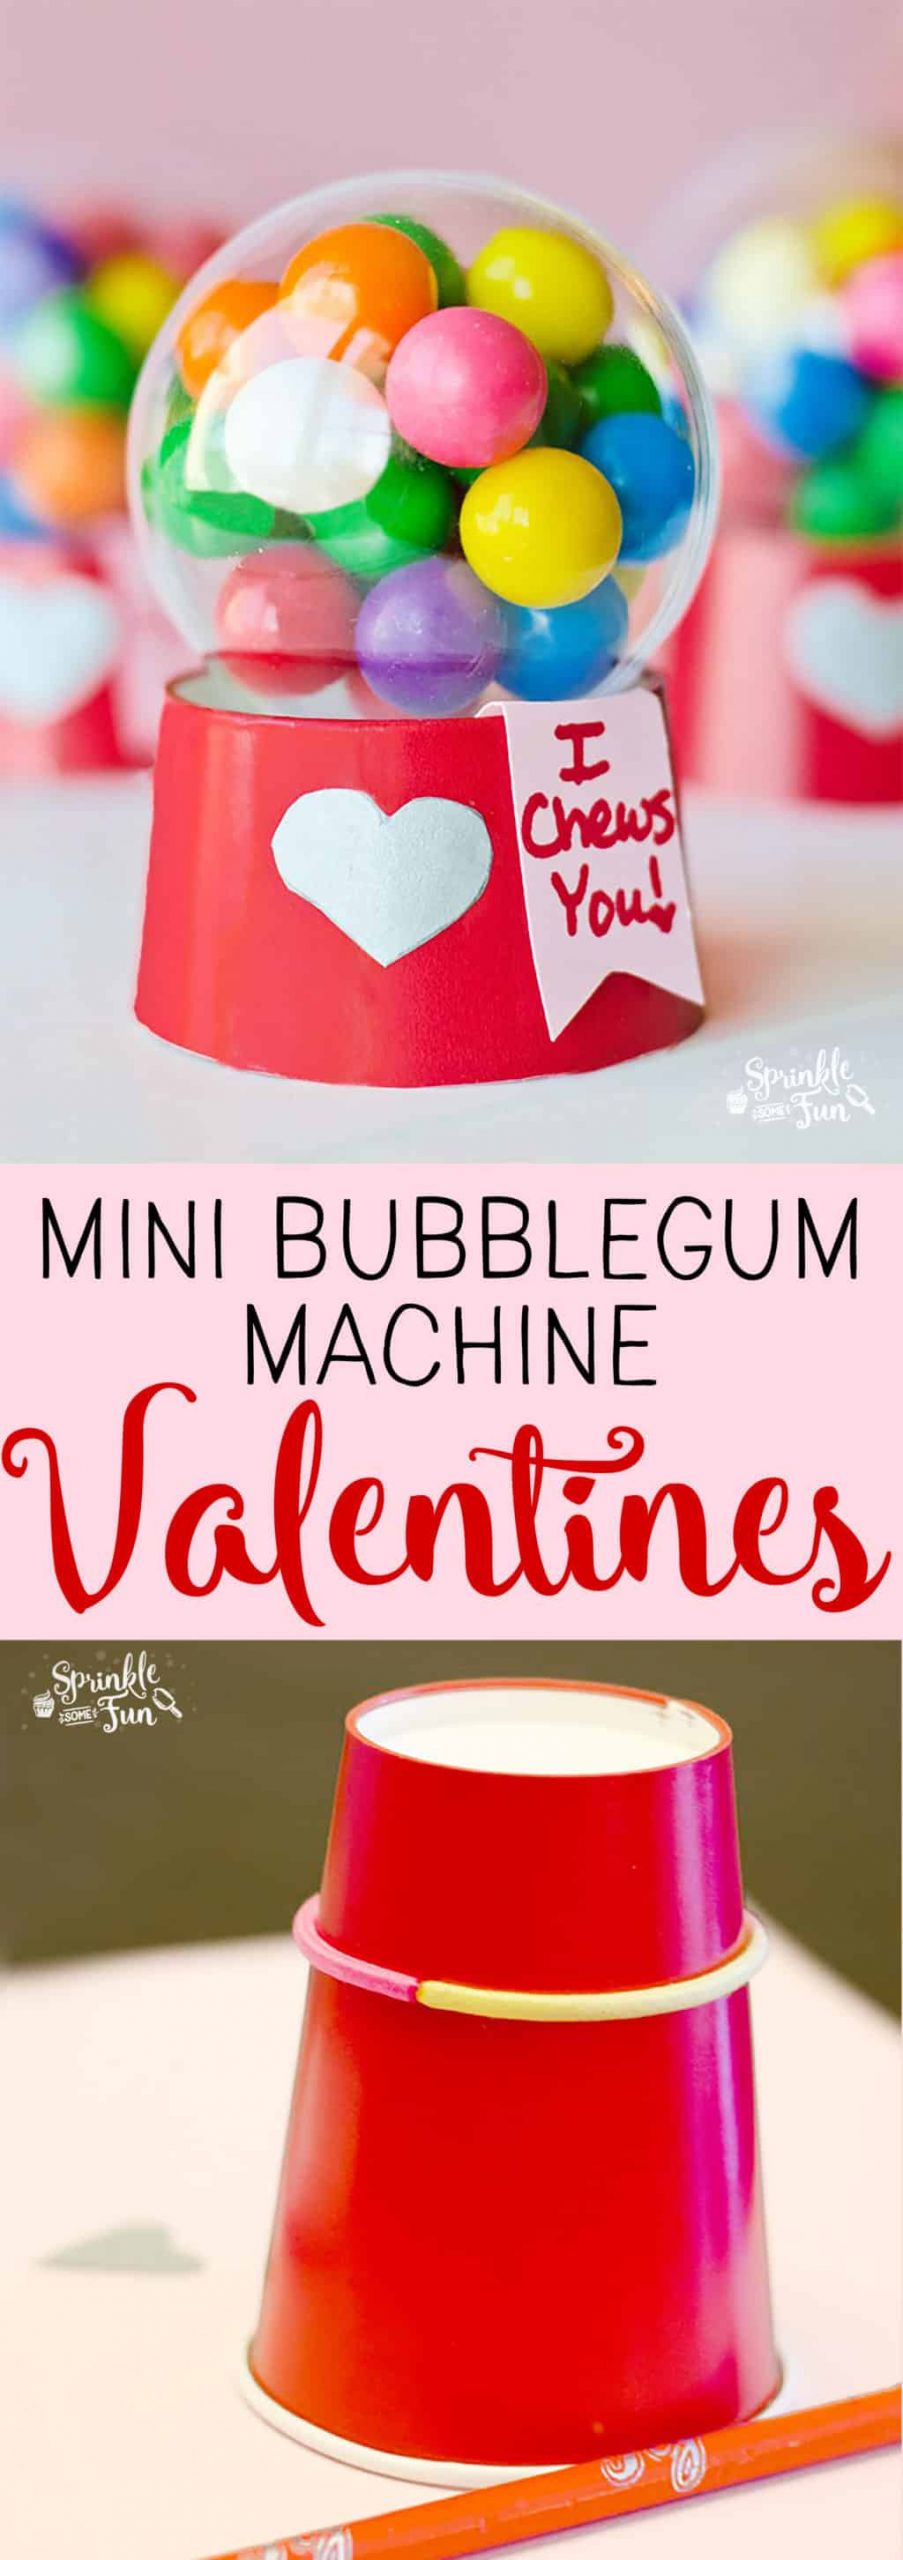 Valentines Gift Ideas For Children
 Mini Bubblegum Machine Valentines